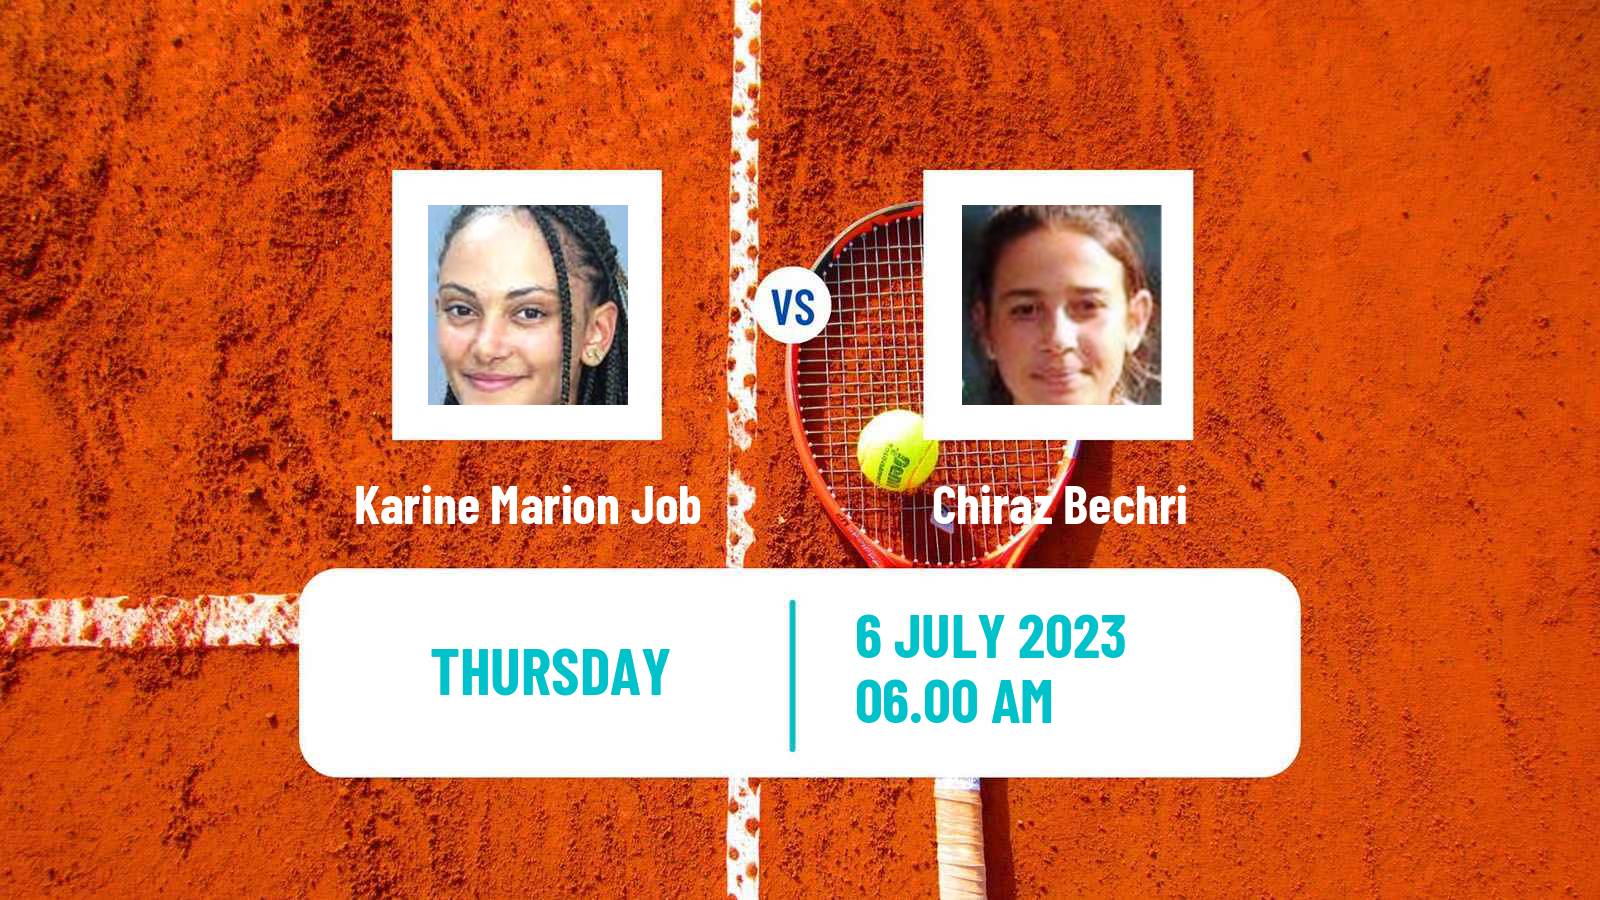 Tennis ITF W15 Monastir 22 Women Karine Marion Job - Chiraz Bechri